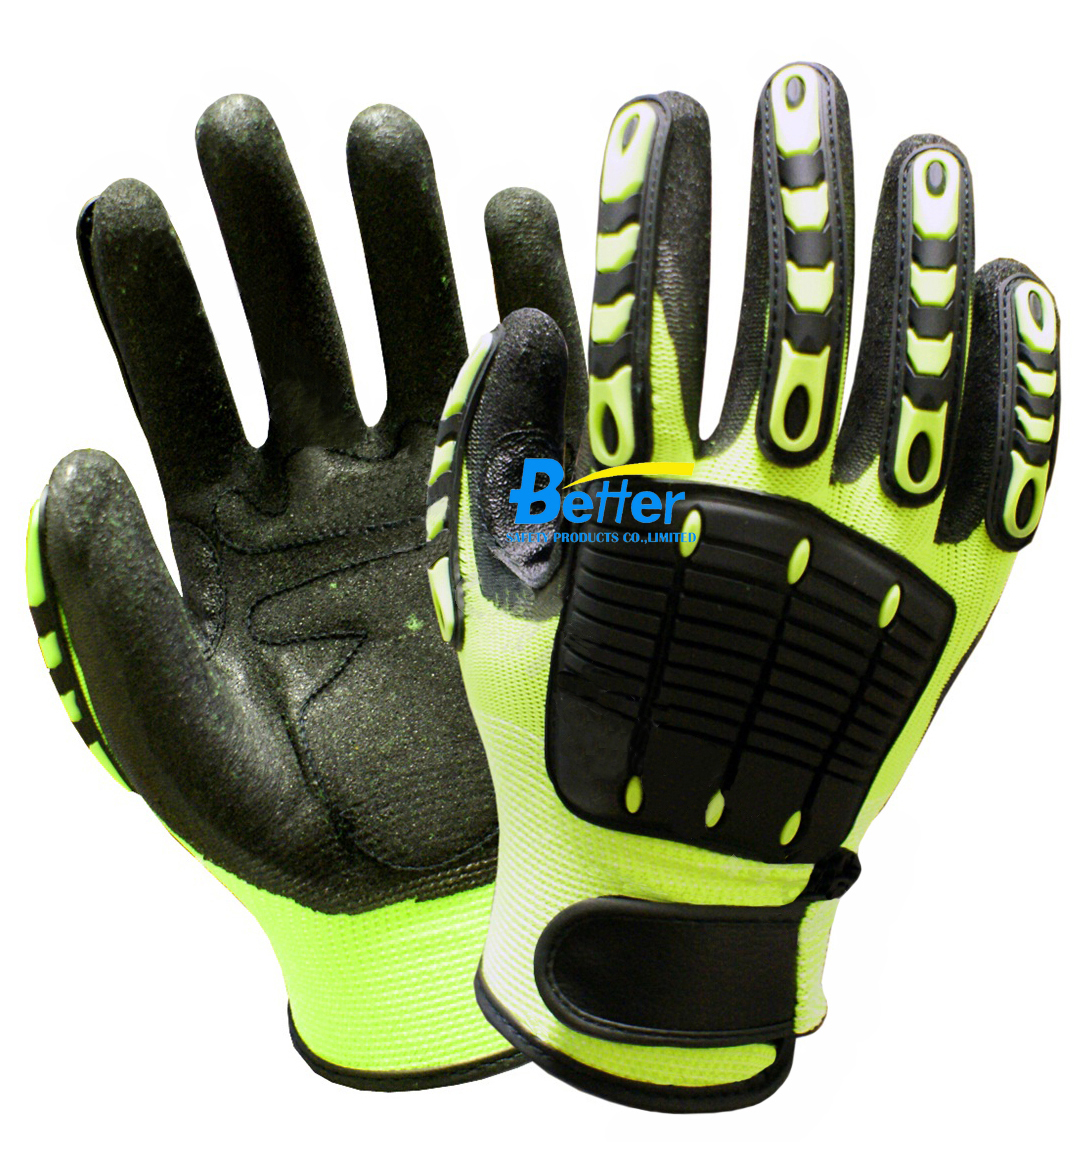 BGAV003-Hi-Vis Nylon Heavy Duty Impact Resistant and Anti-Vibration Gloves